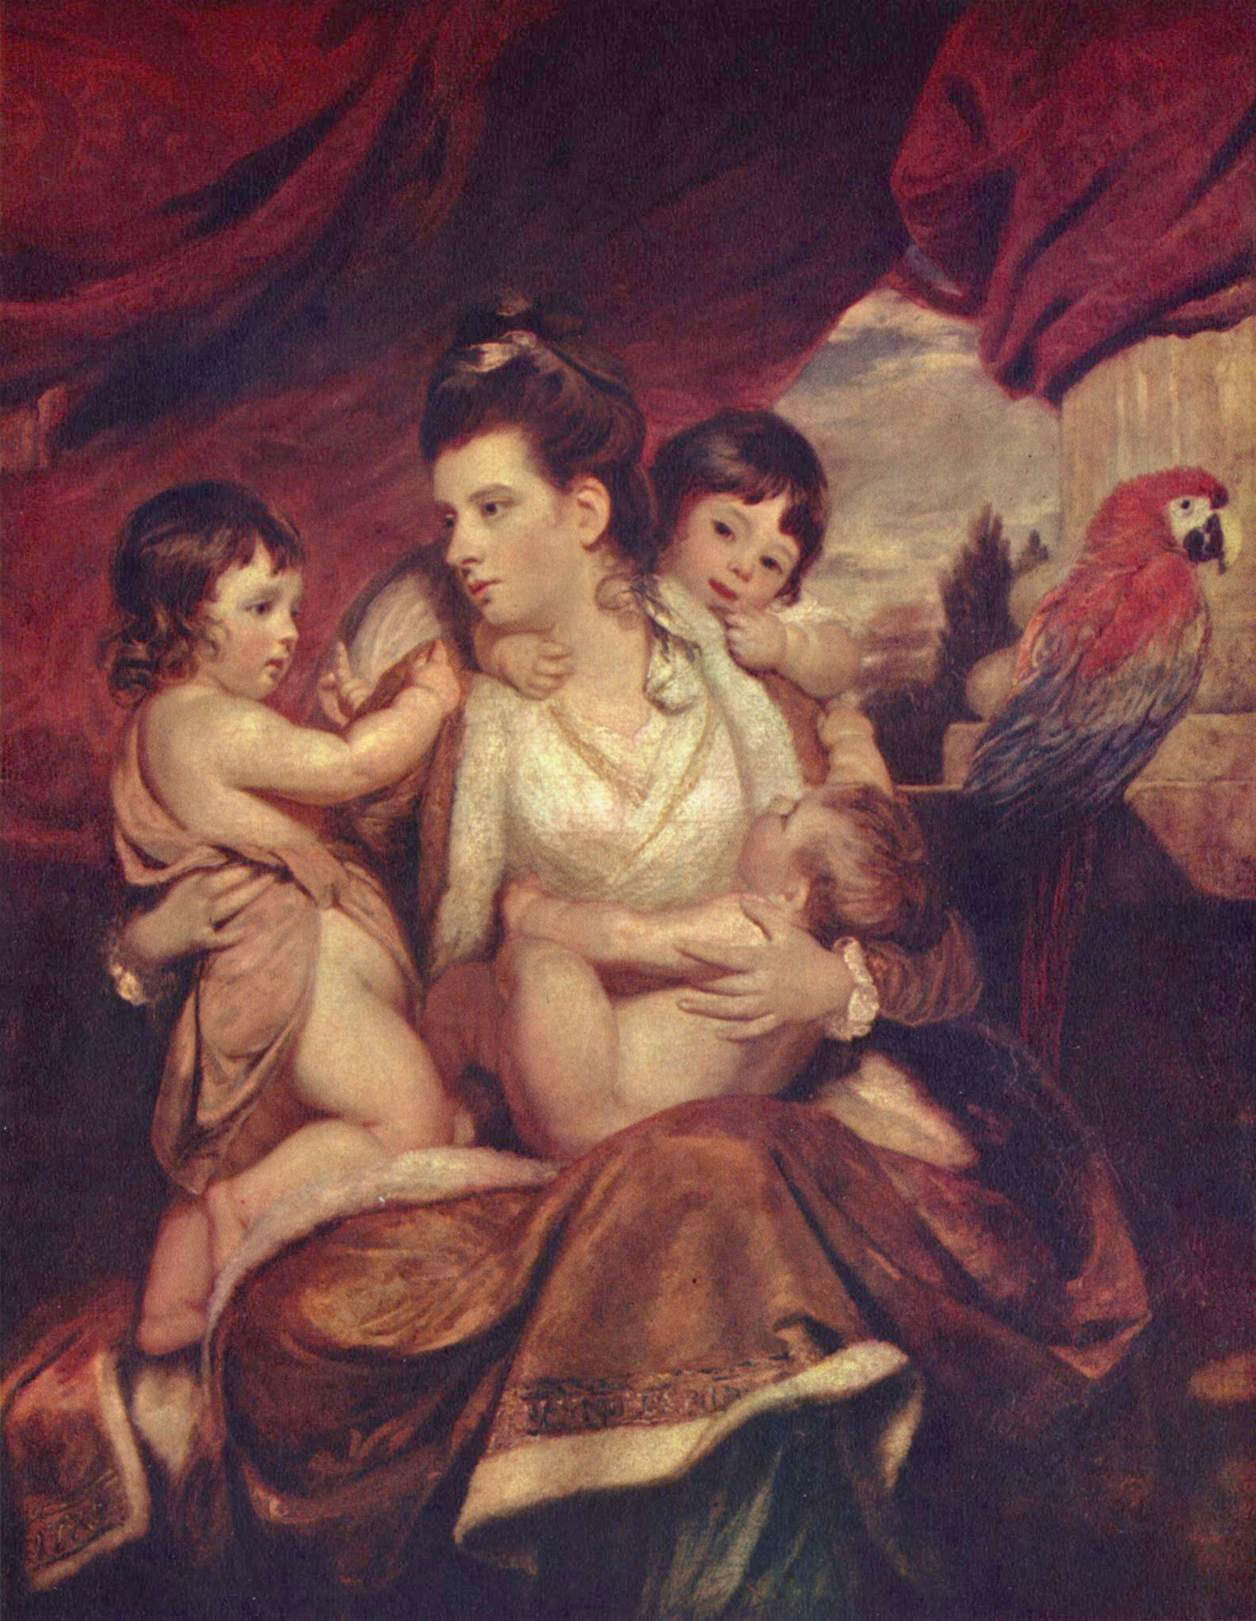 Reynolds Joshua - Lady Cockburn mit ihren Kindern